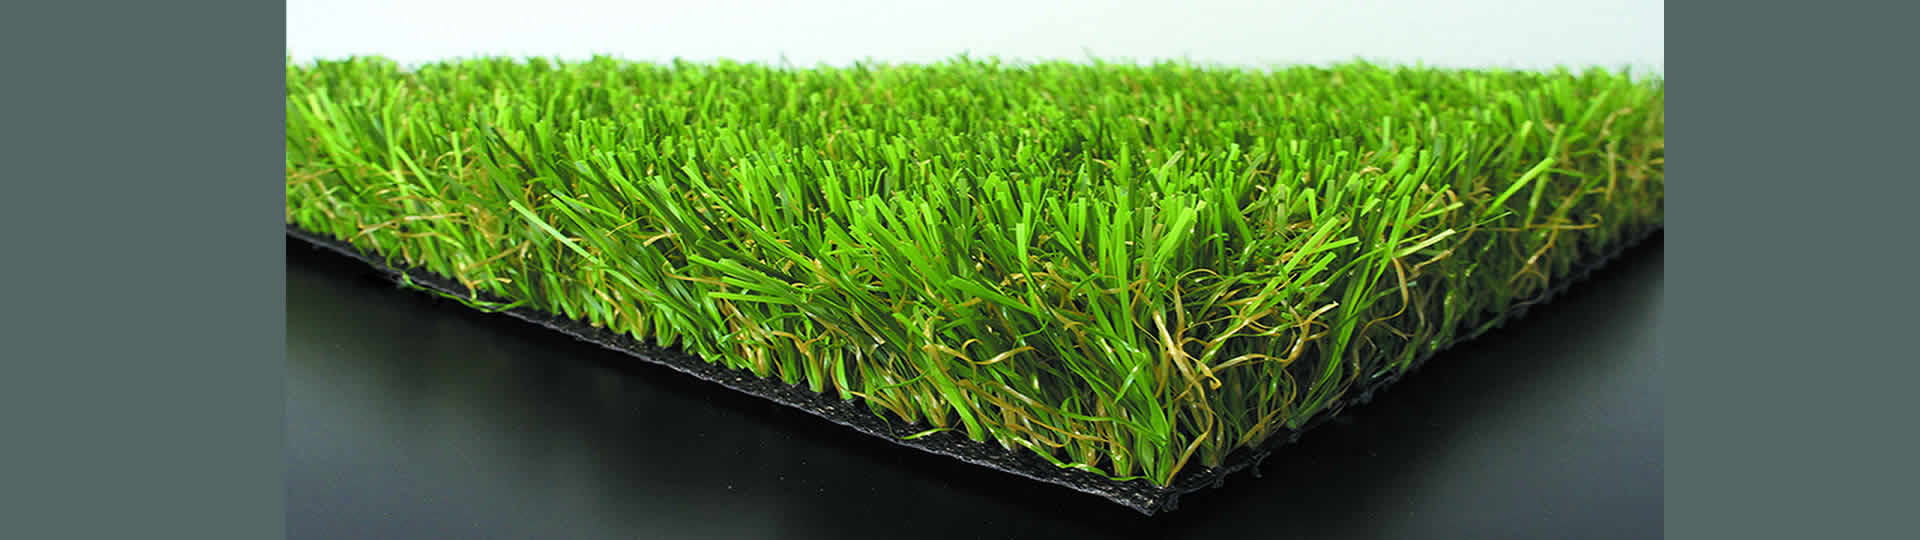 grass sintetico peru artificial grass